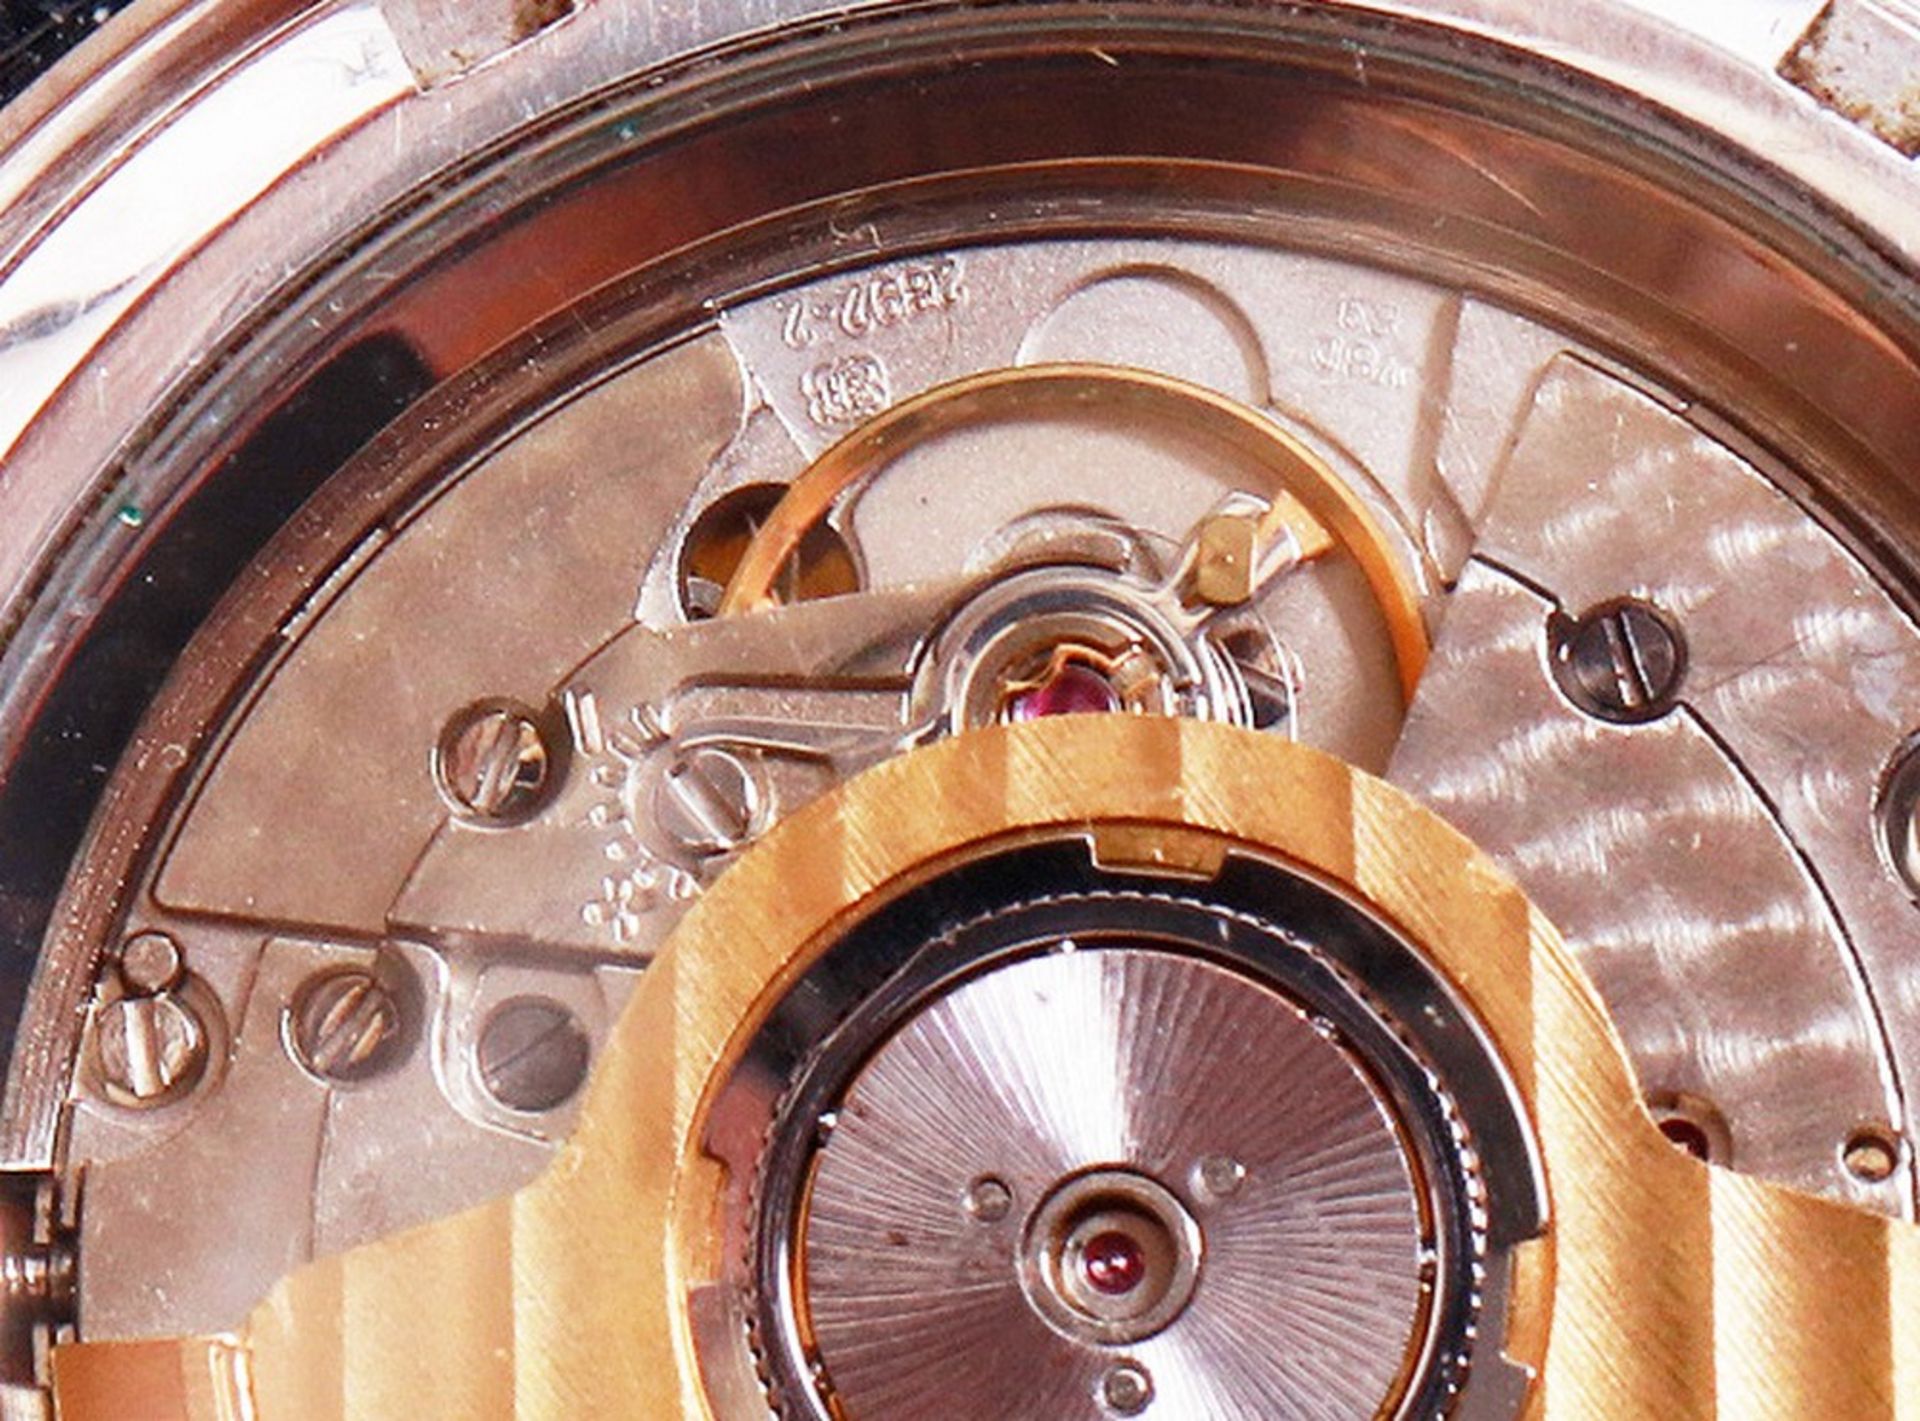 Men's wristwatch, Chronoswiss, model "Pacific 100m", 1990s - Image 7 of 13